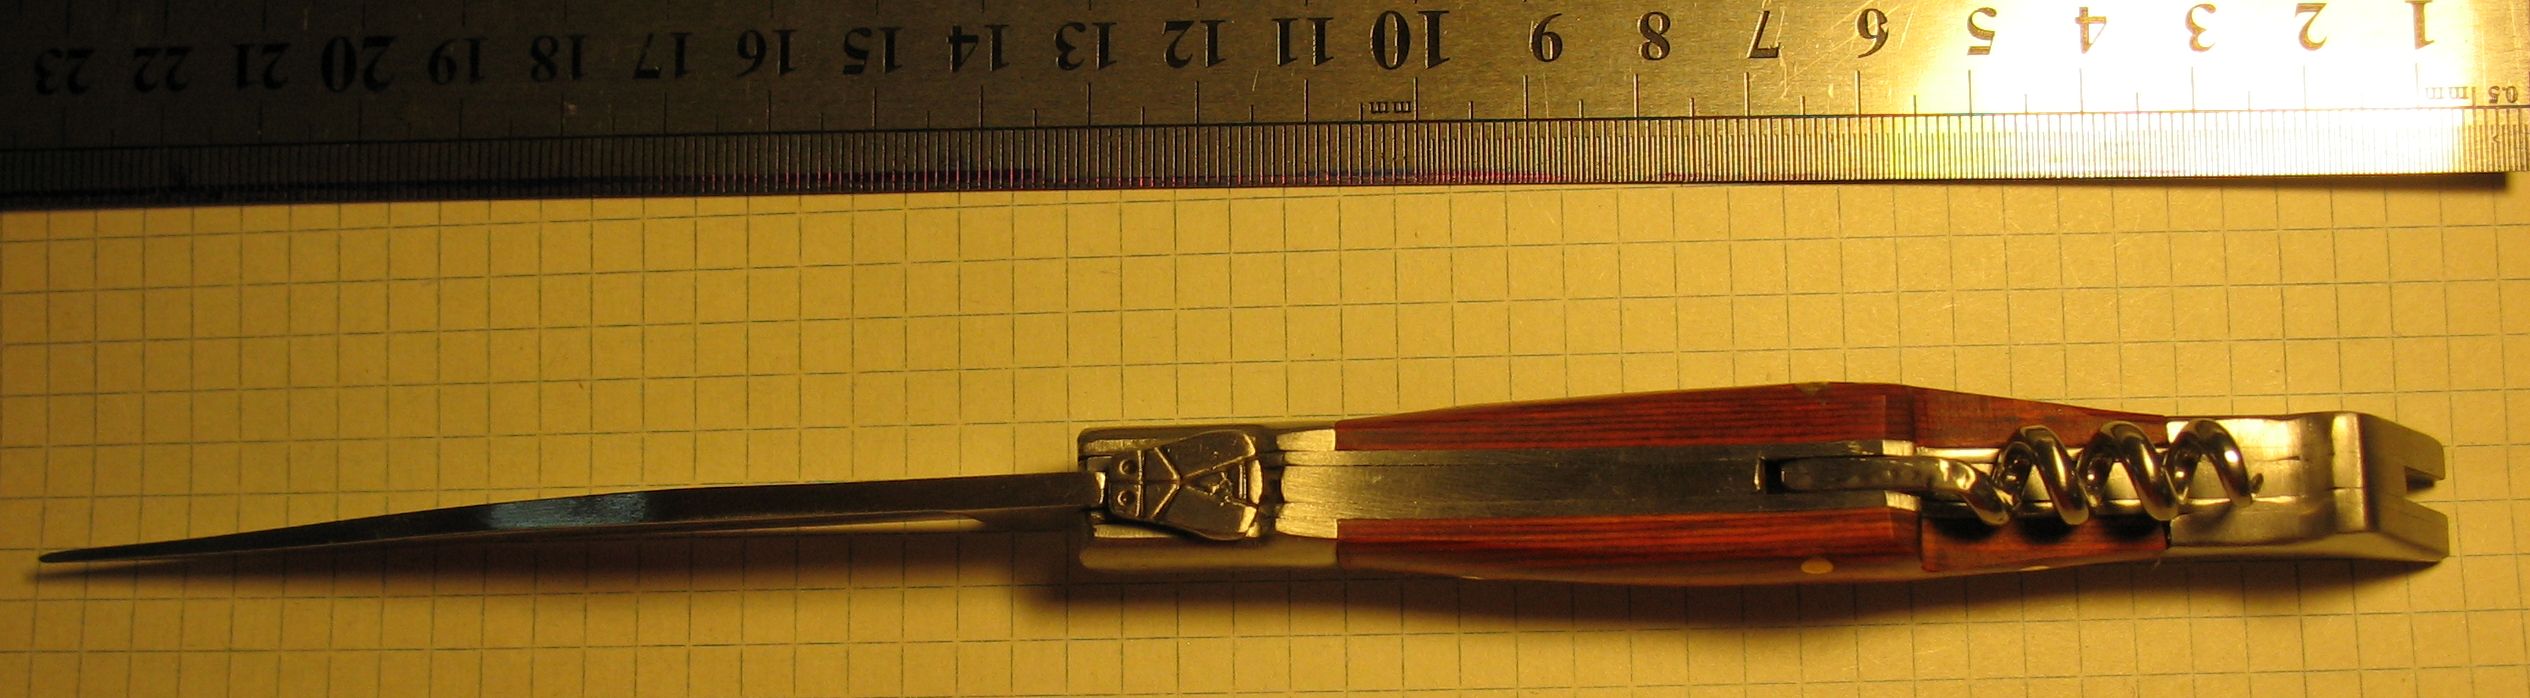 Раскладной нож со штопором, фирма "Пират", Тамбов